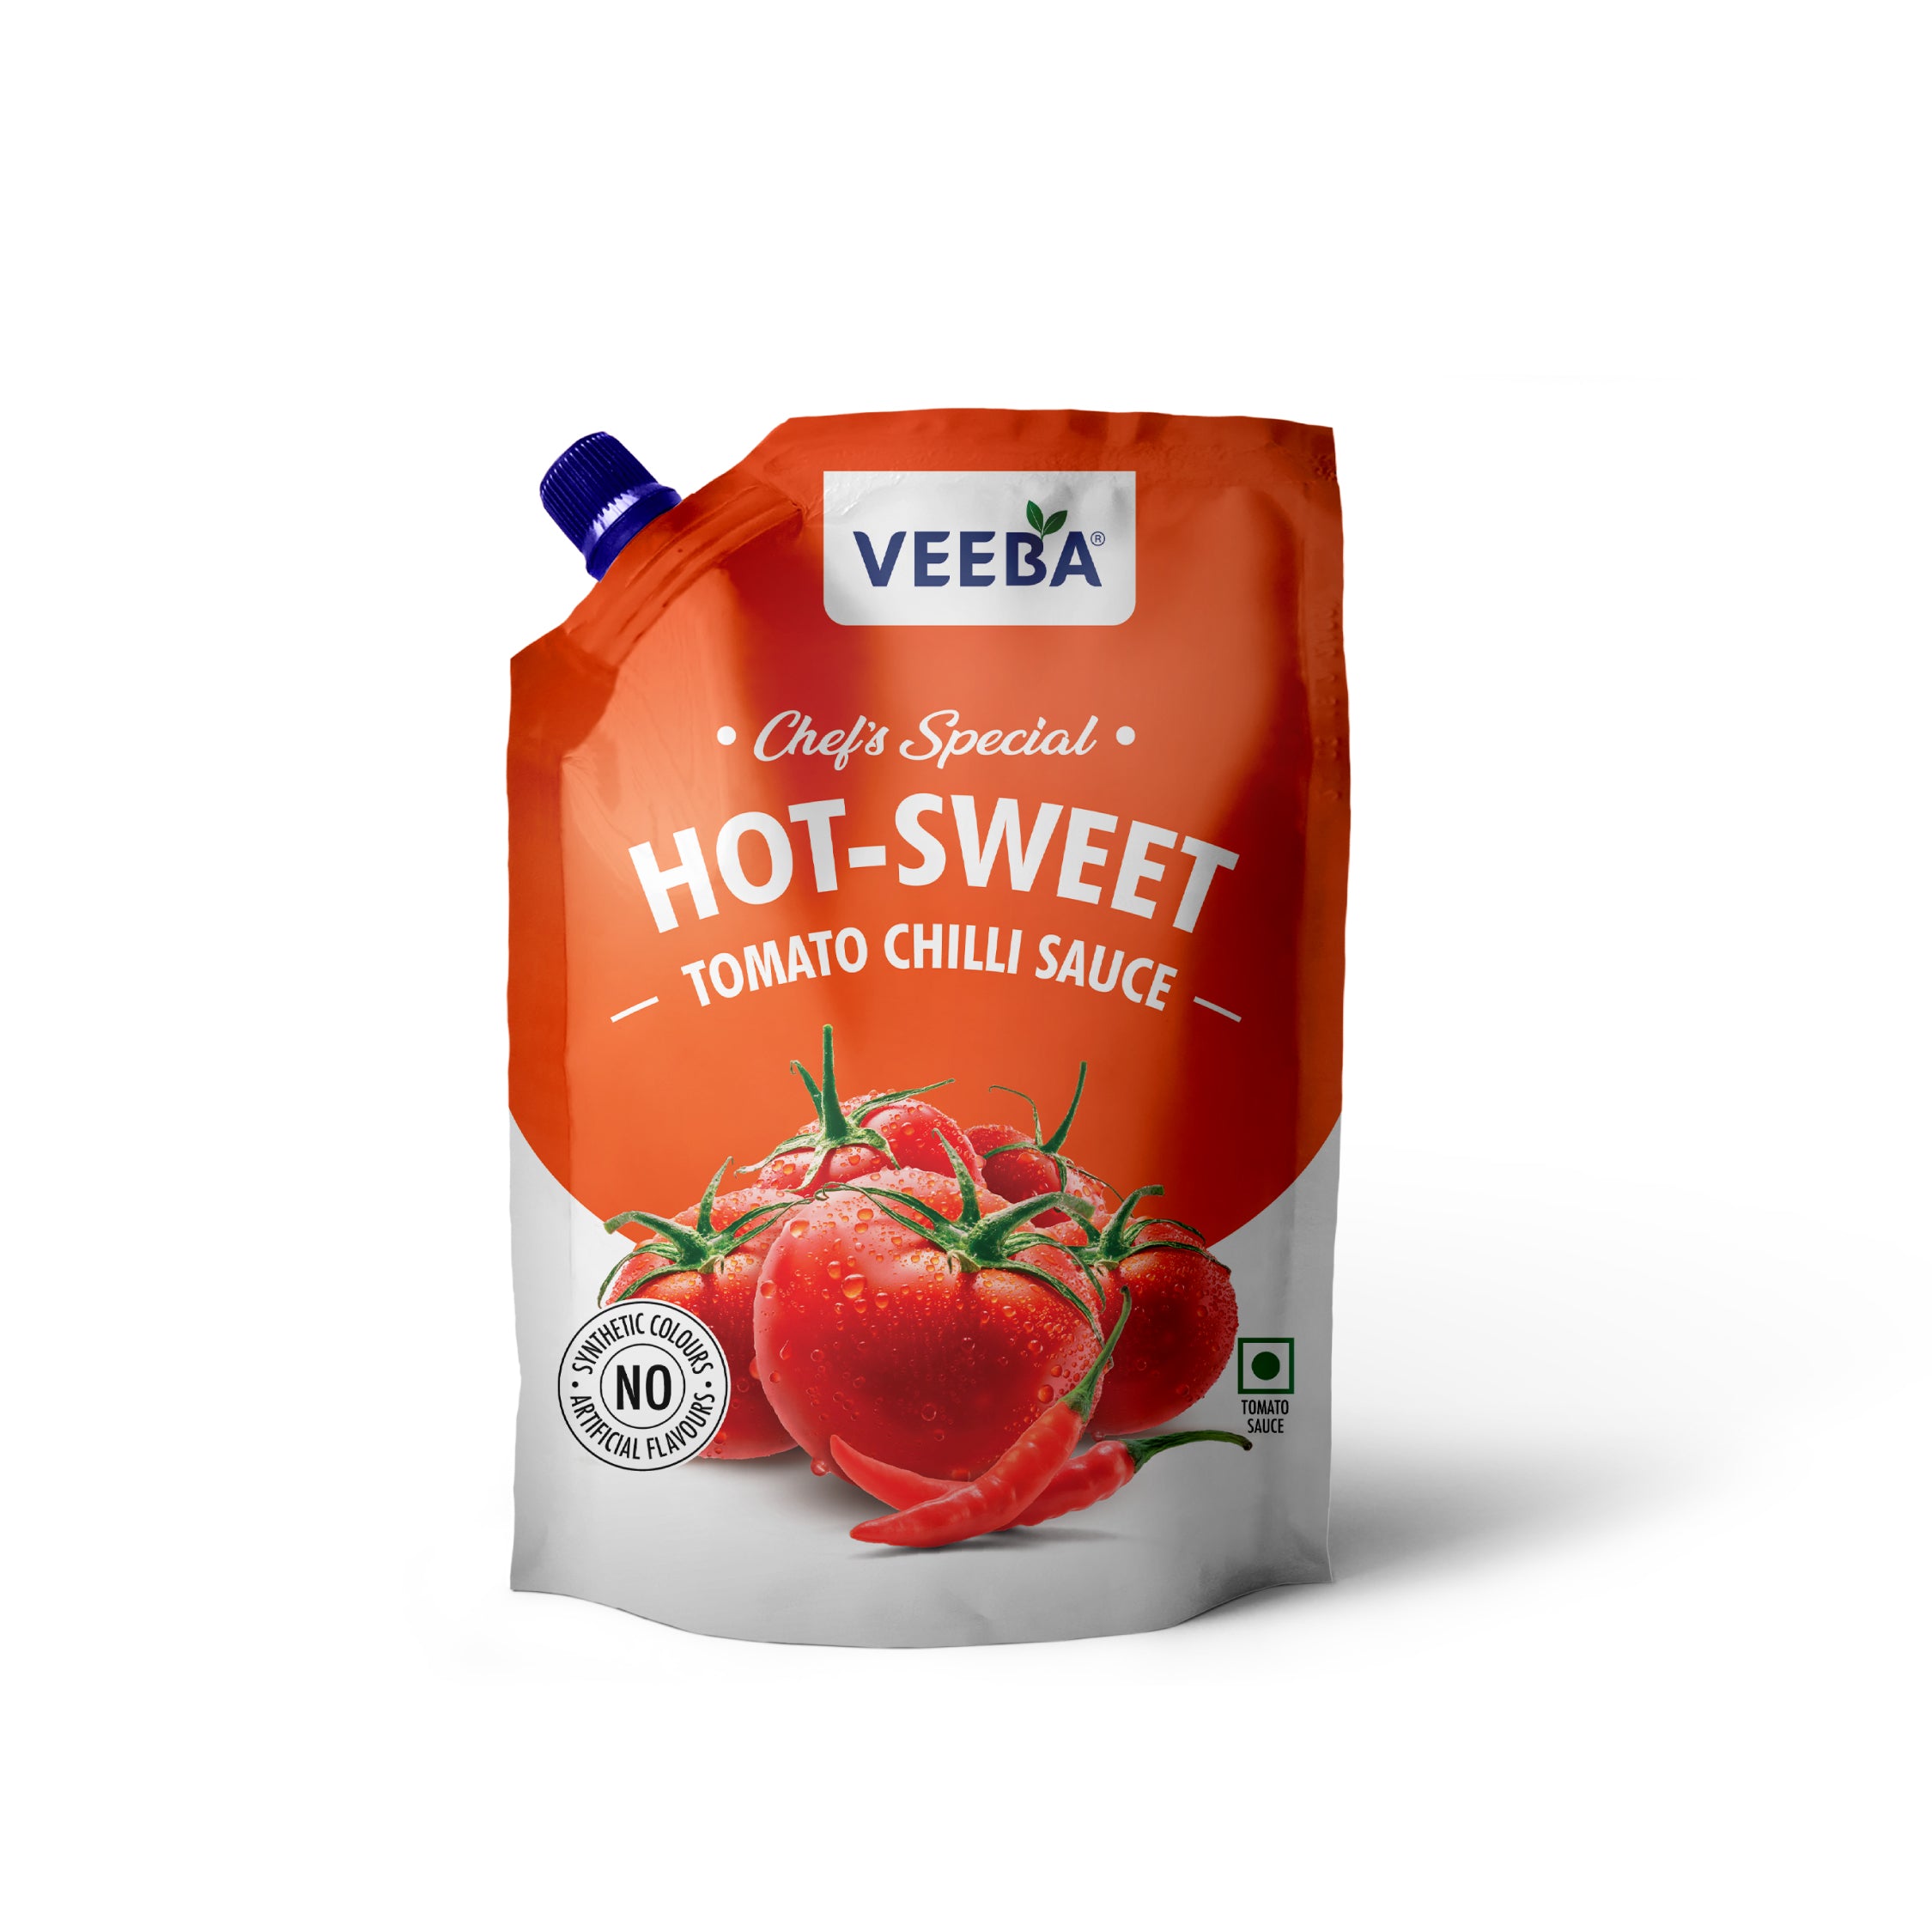 VEEBA CHEF'S SPECIAL HOT-SWEET TOMATO CHILLI SAUCE (450G)